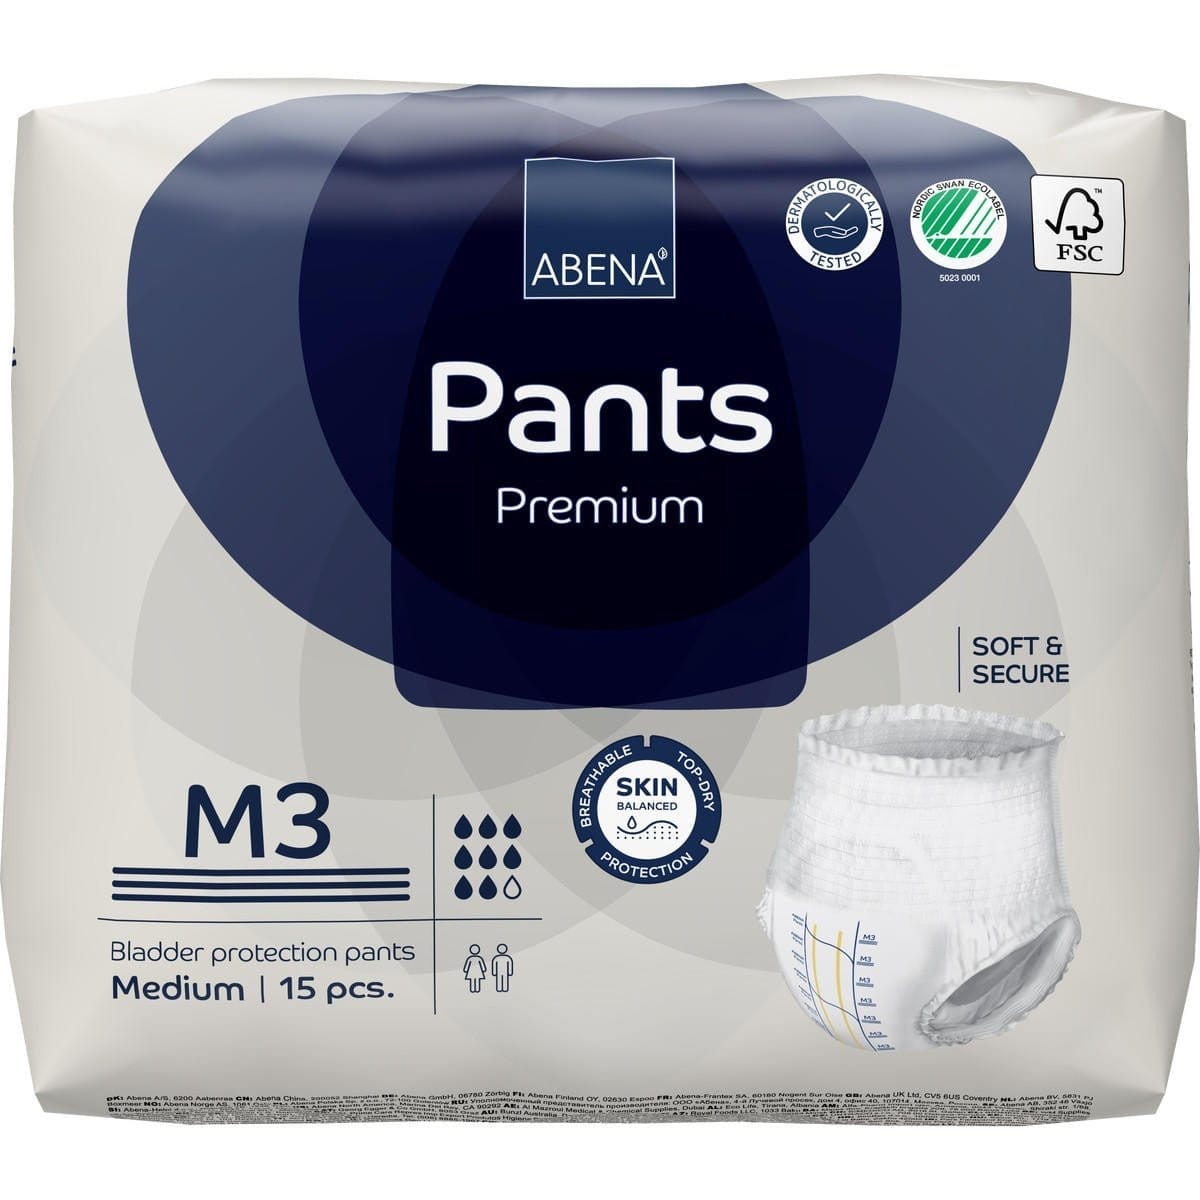 Image of Abena Pants Premium Pull-On Underwear Level 3 (formerly Abri Flex)